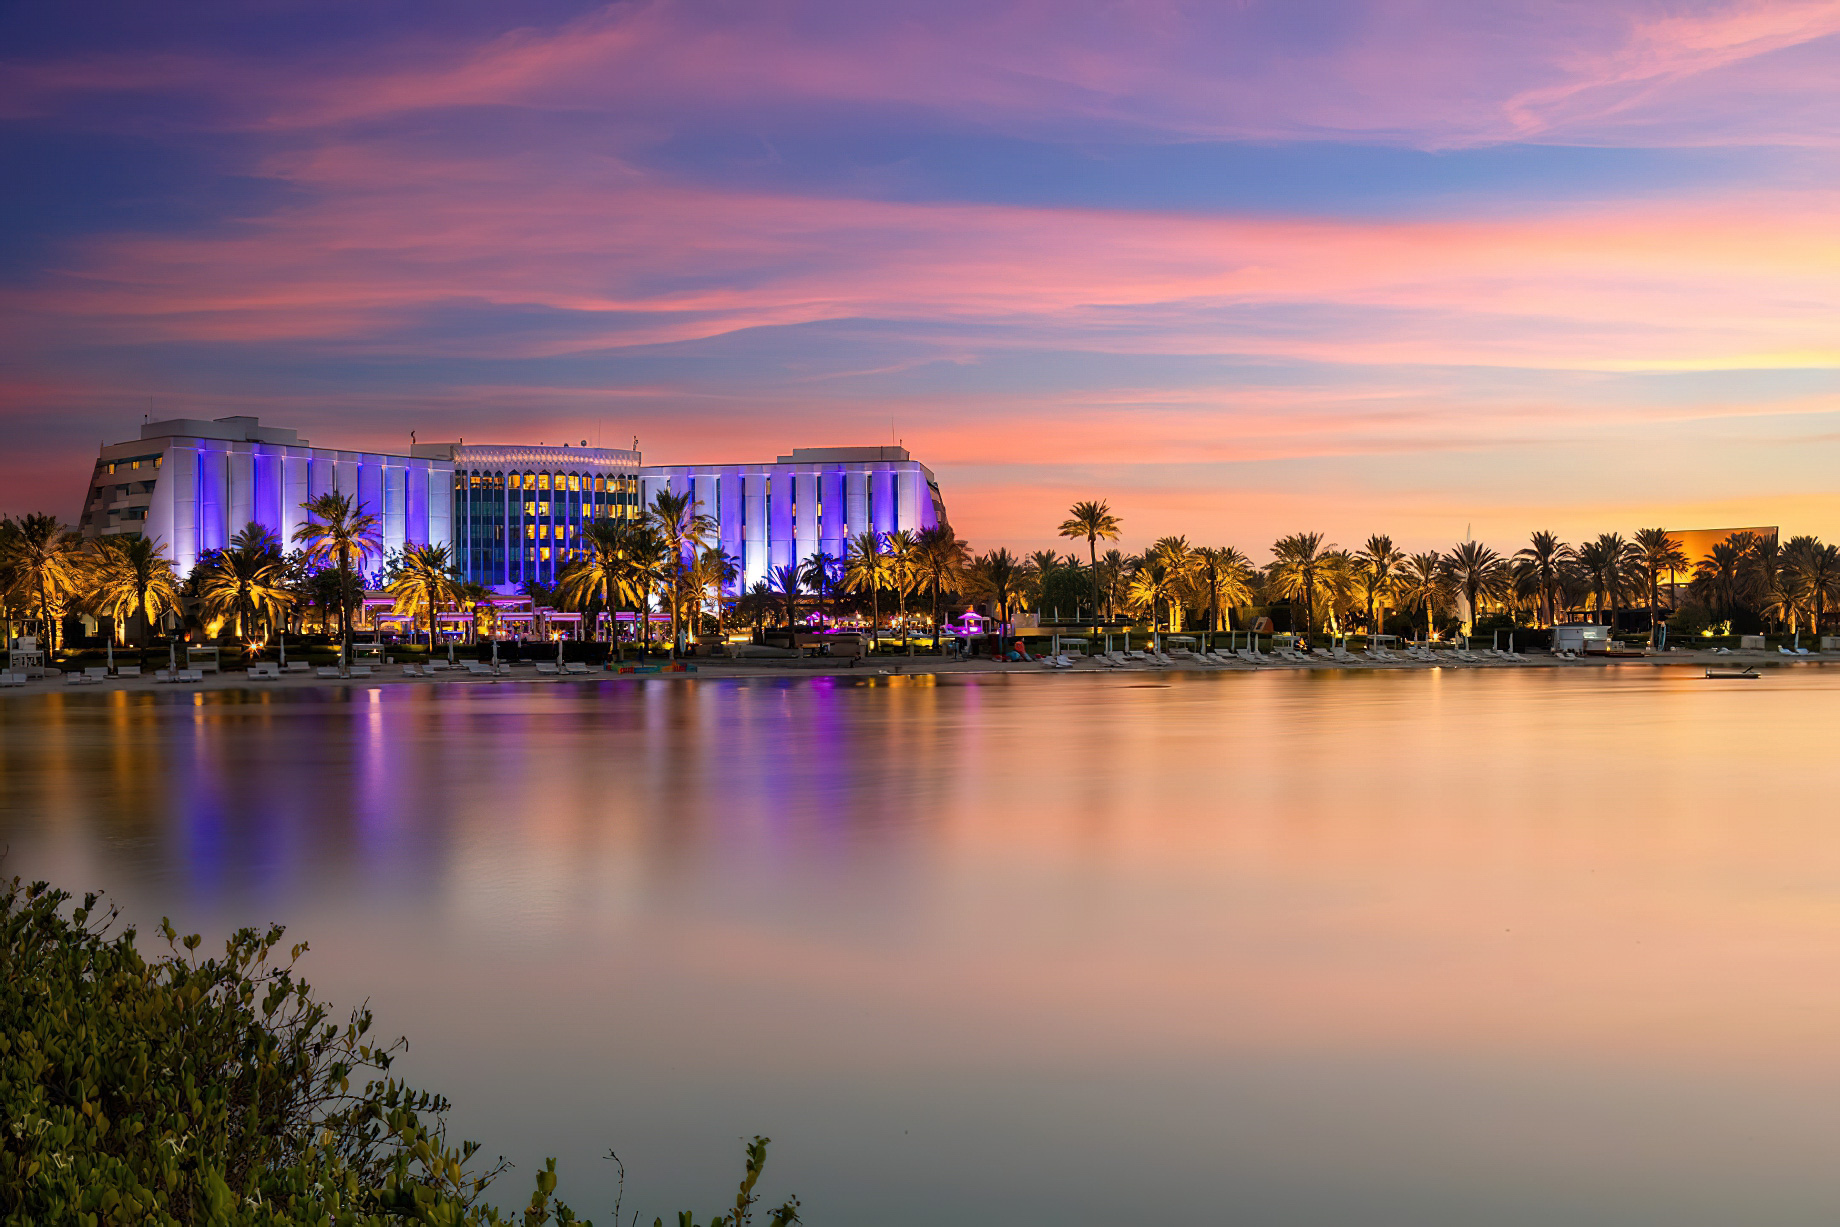 The Ritz-Carlton, Bahrain Resort Hotel – Manama, Bahrain – Sunset Beach View